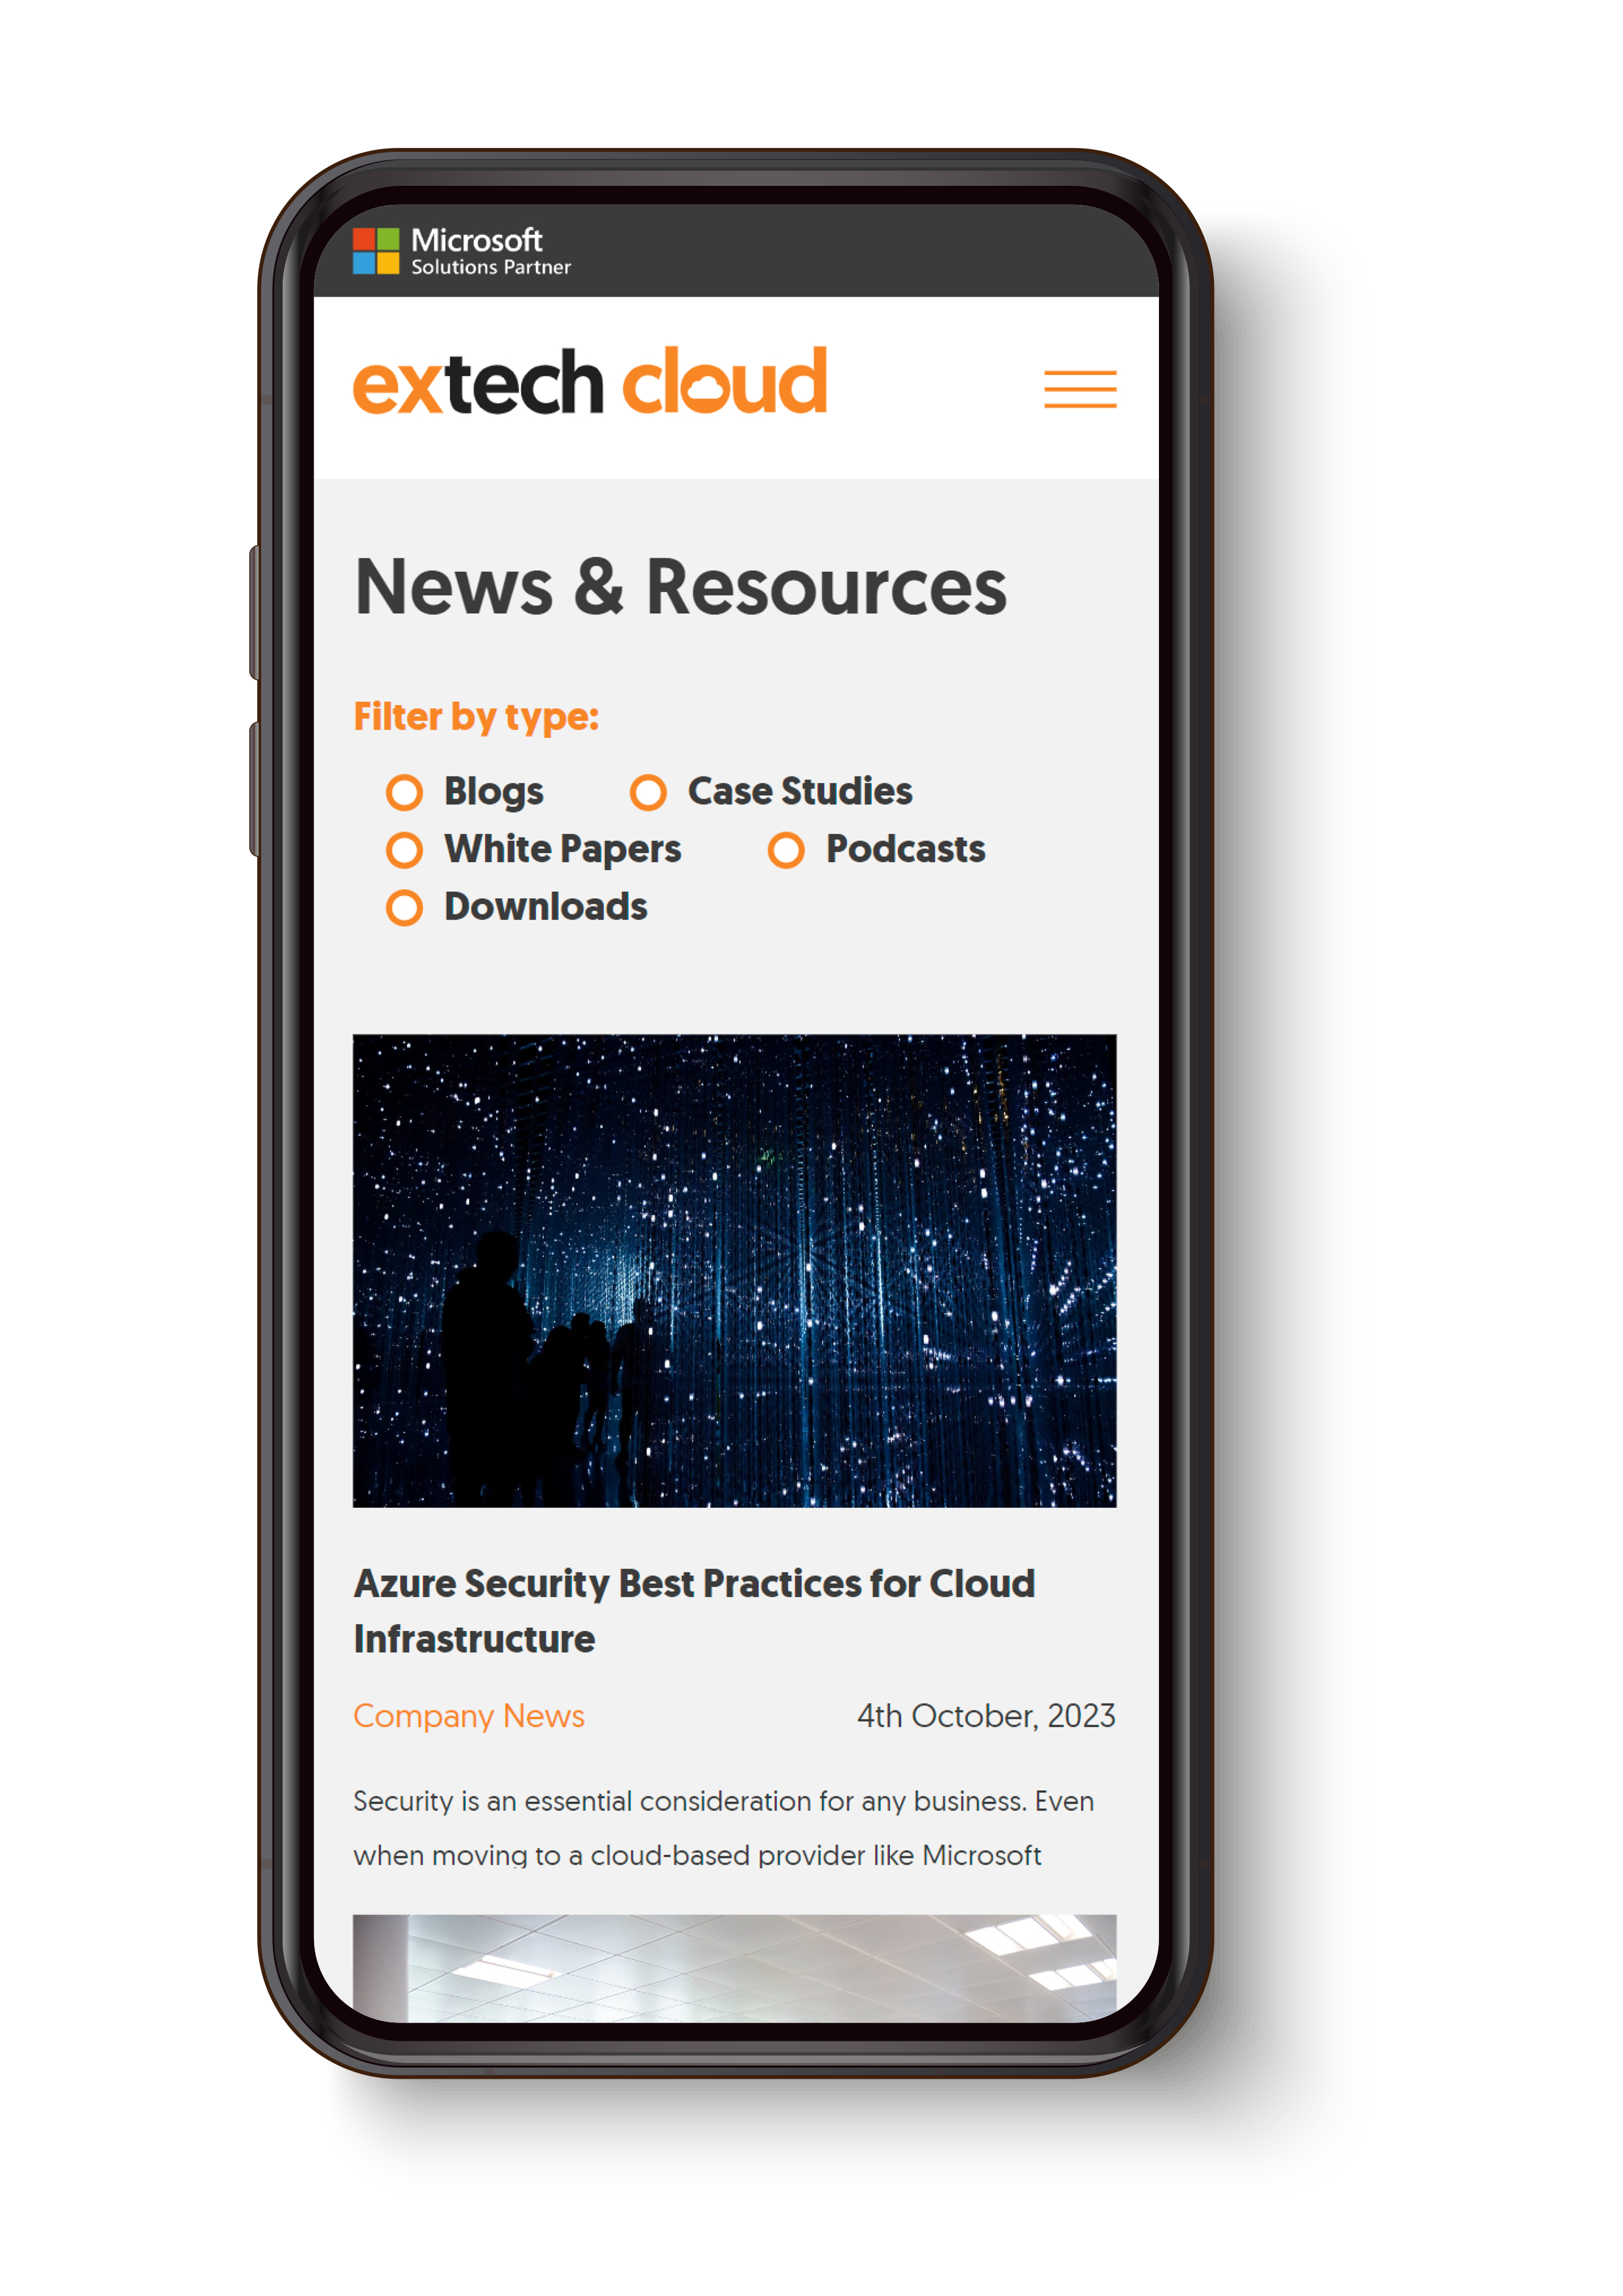 Extech website screenshot in mobile view